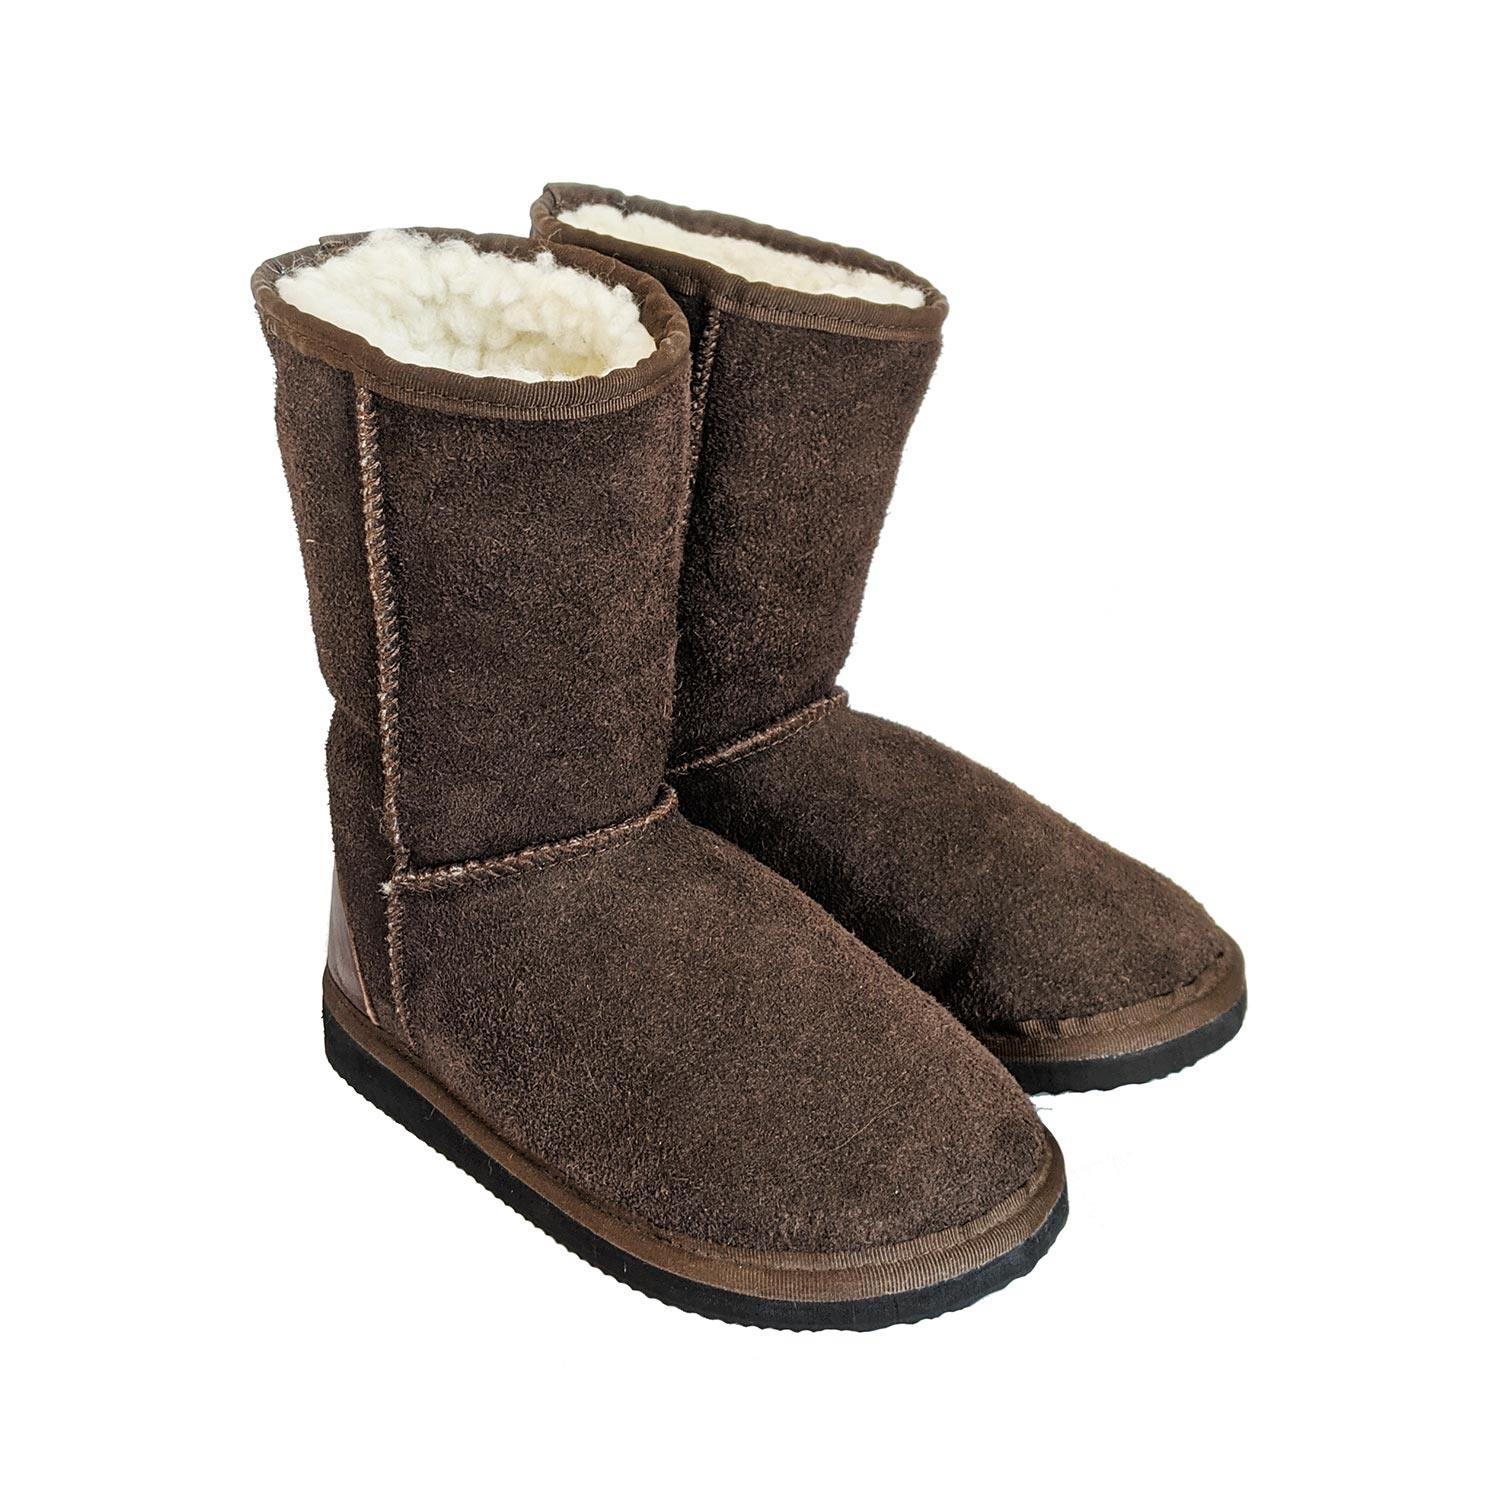 Karu Oskie Chocolate Suede & Wool Slipper Boots clothing & accessories Karu Slippers